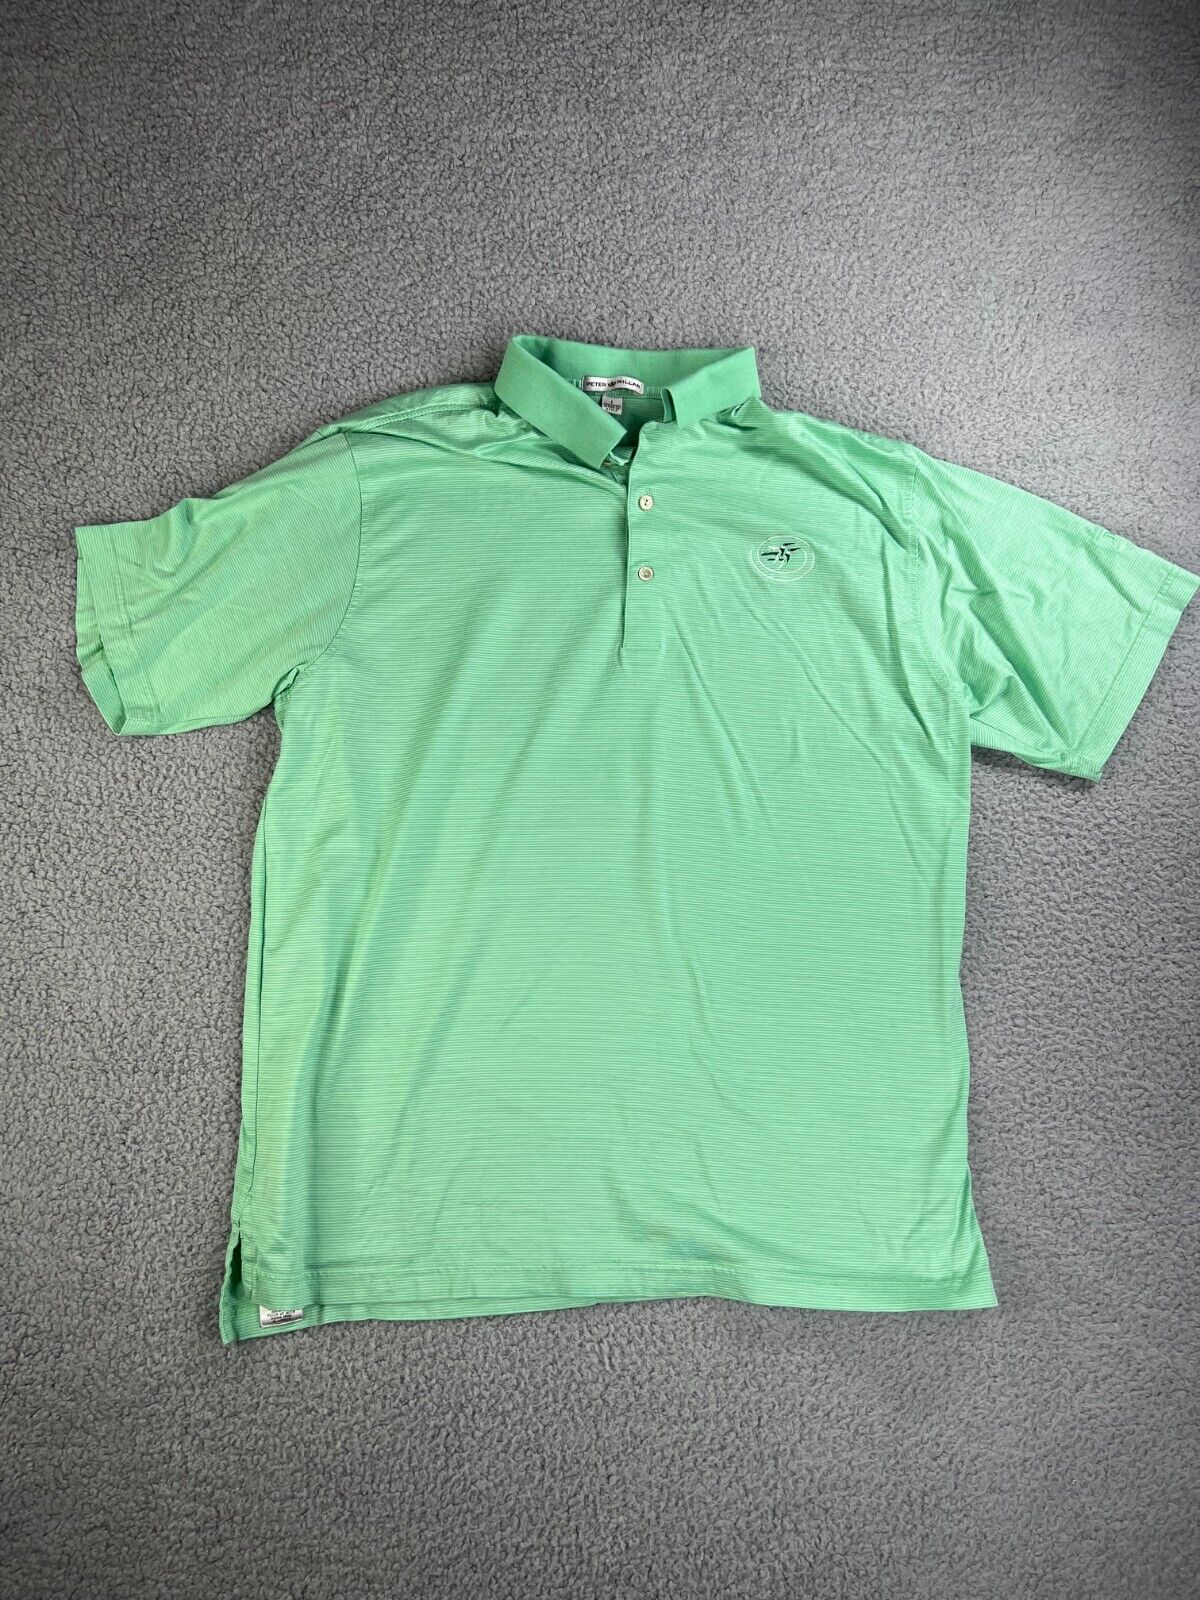 Peter Millar Green Striped Golf Polo Shirt Mens Size Large L